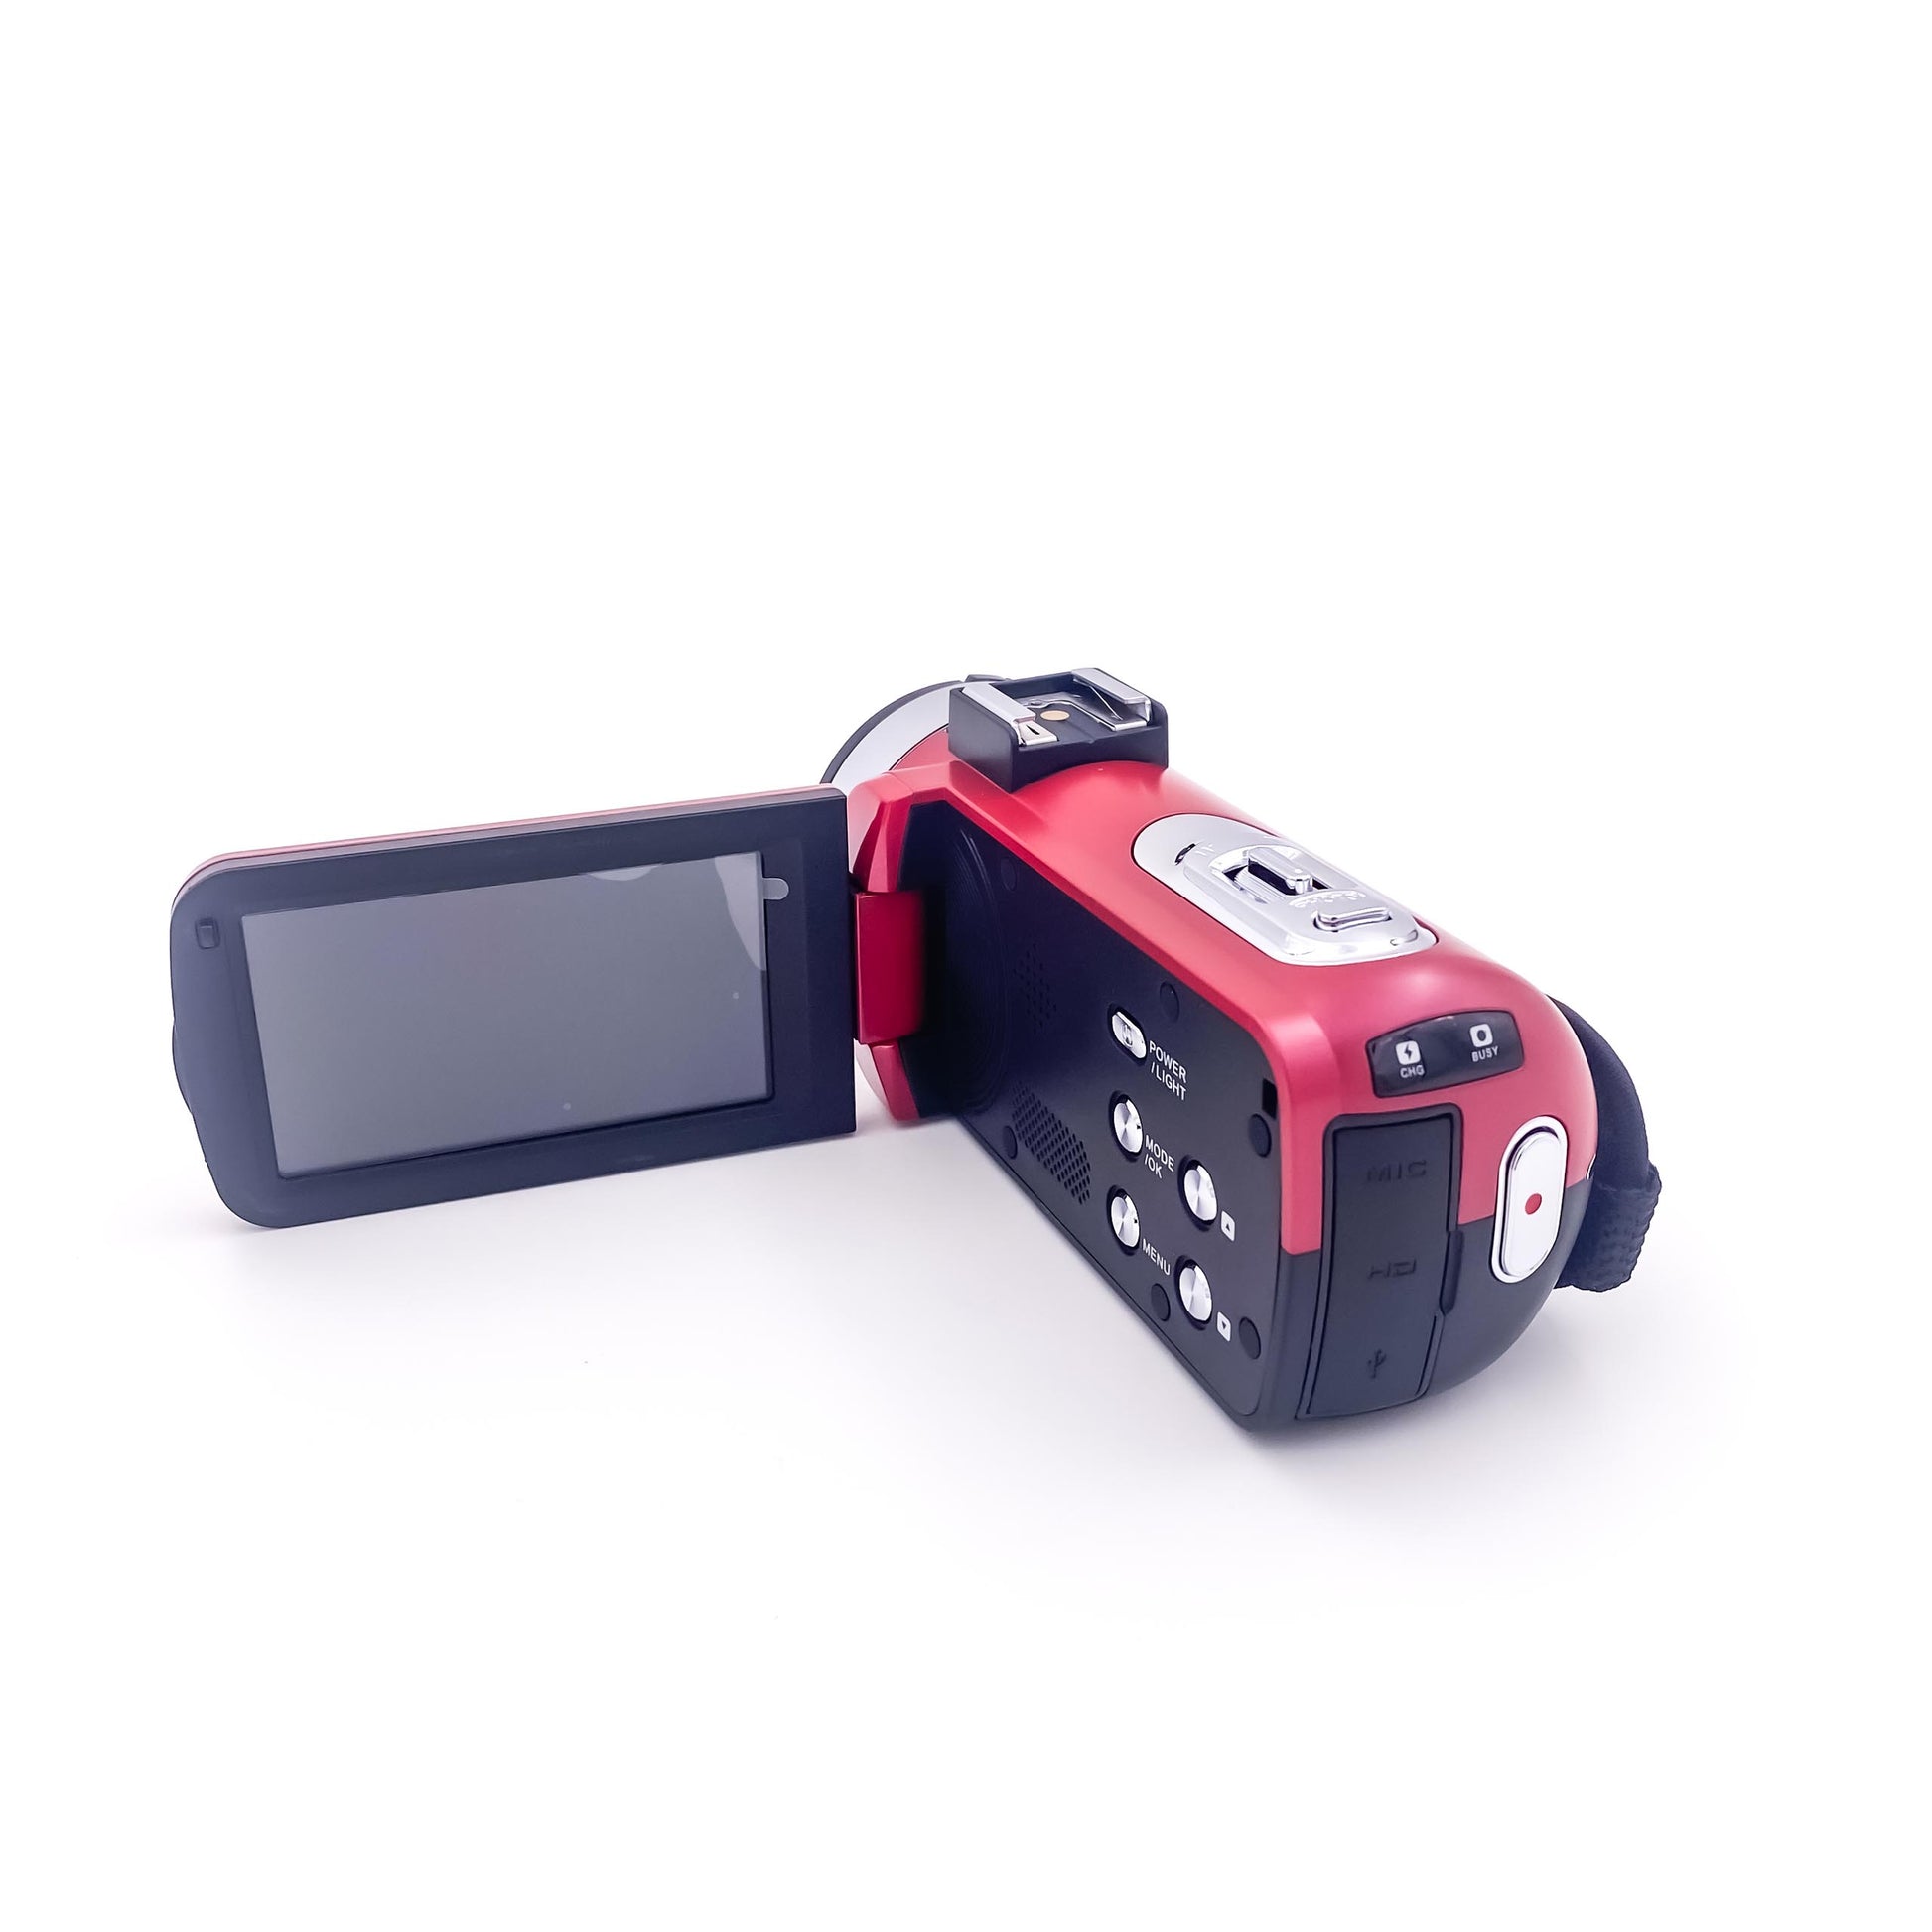 4k-digital-camcorder-id995hd-v1-burgundy-2